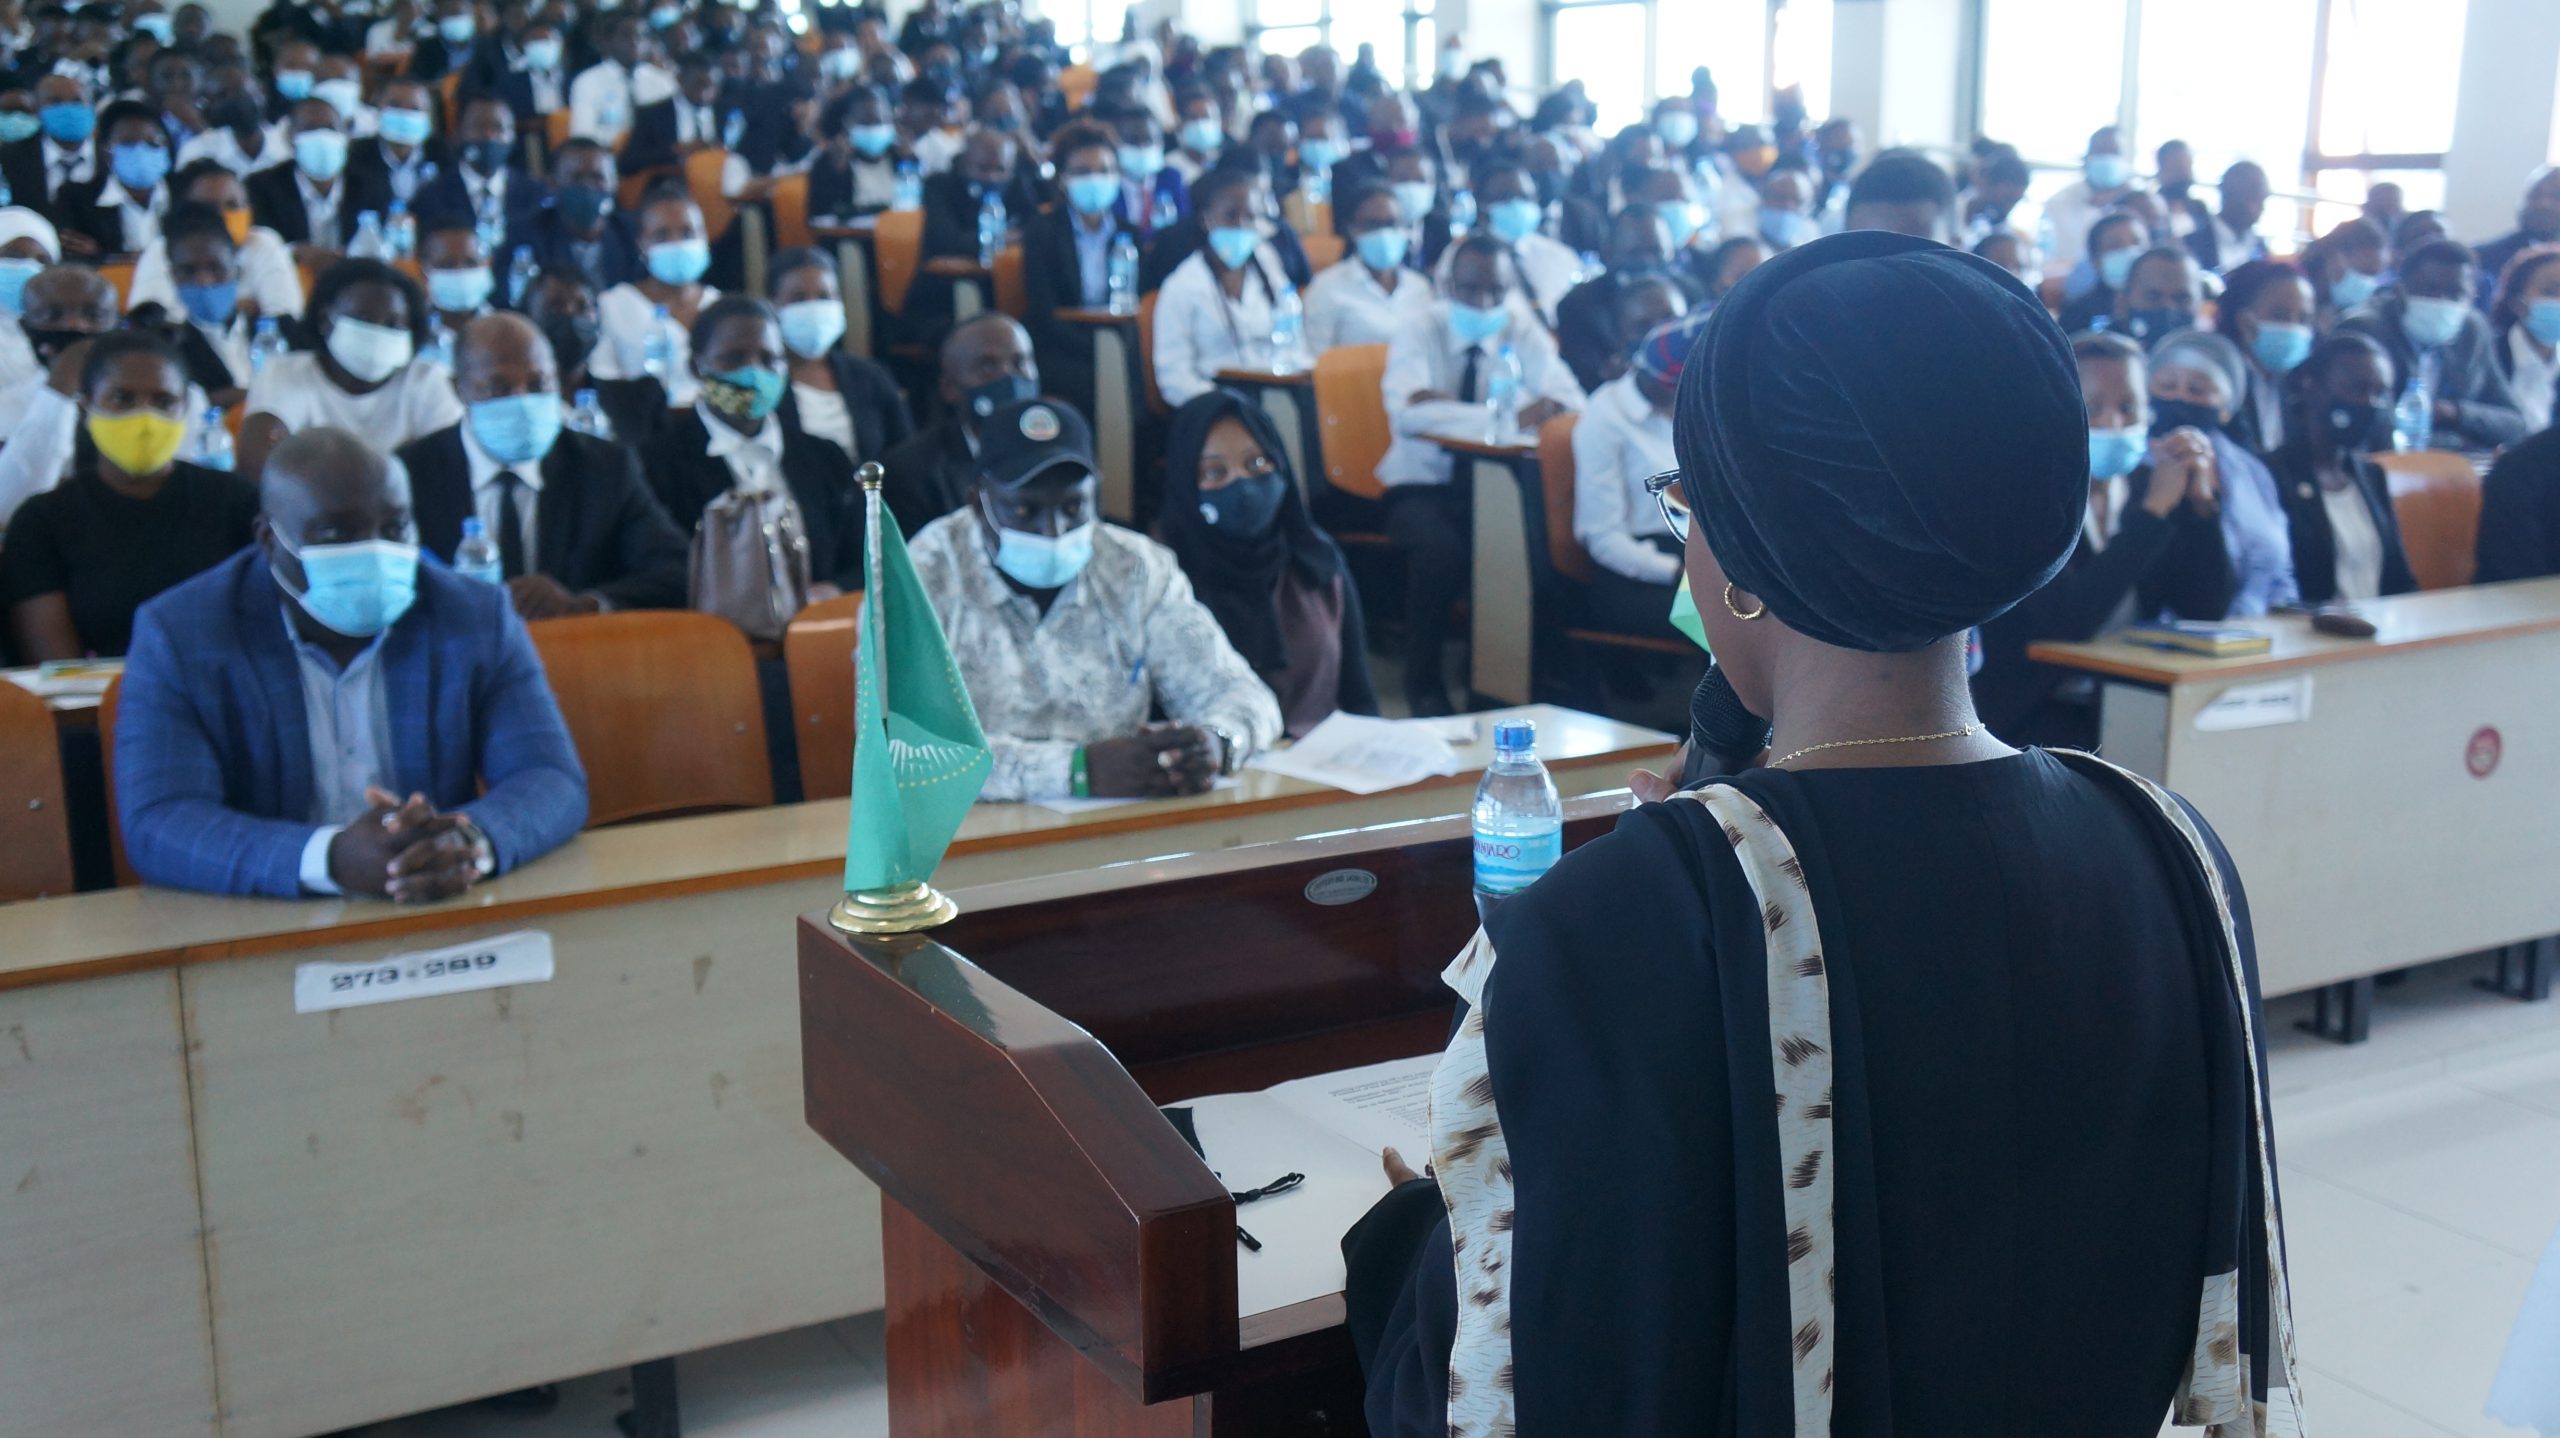 AFRICAN COURT CONDUCTS  SENSITISATION SEMINAR AT LAW SCHOOL OF TANZANIA IN DAR ES SALAAM